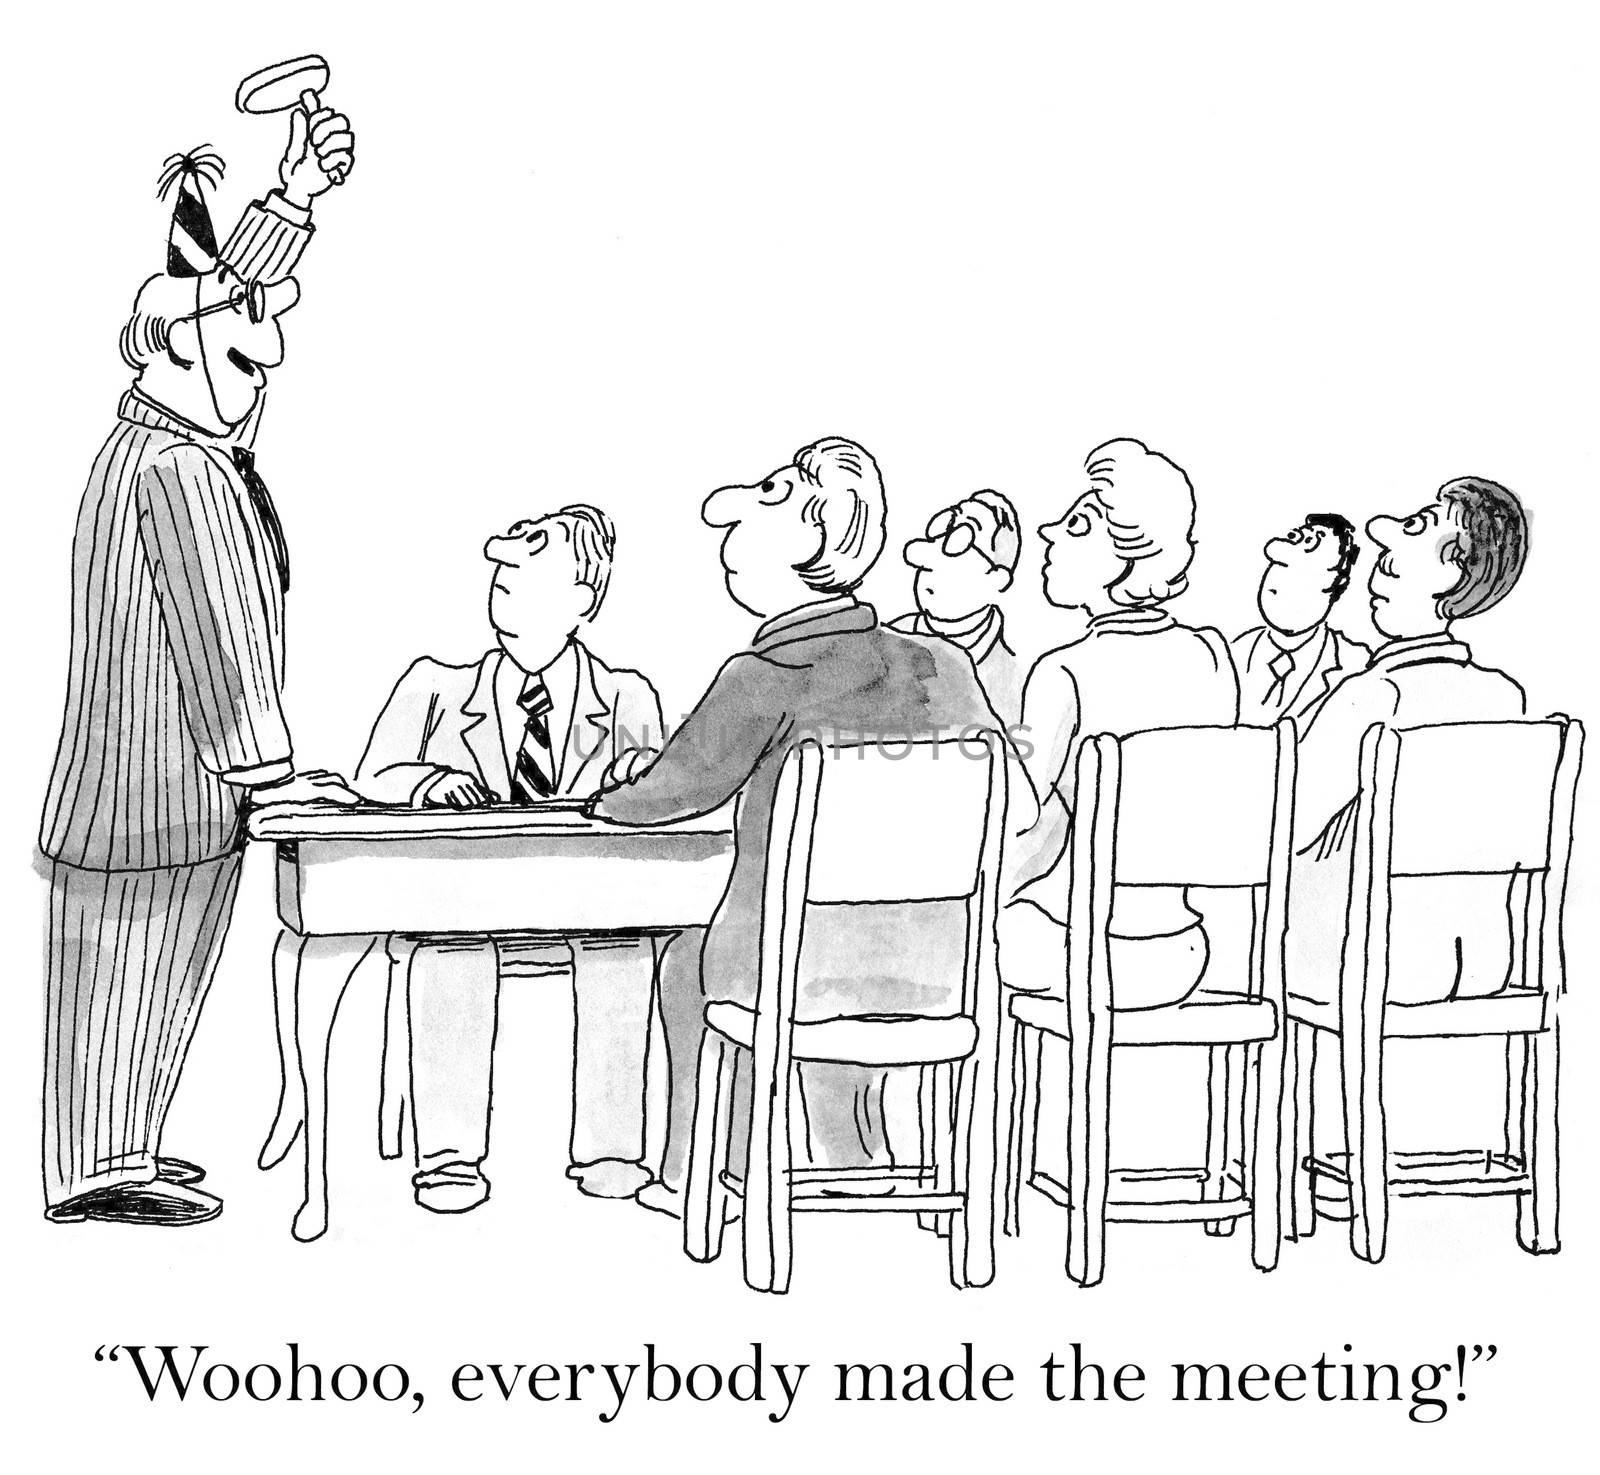 "Woohoo, everybody made the meeting".